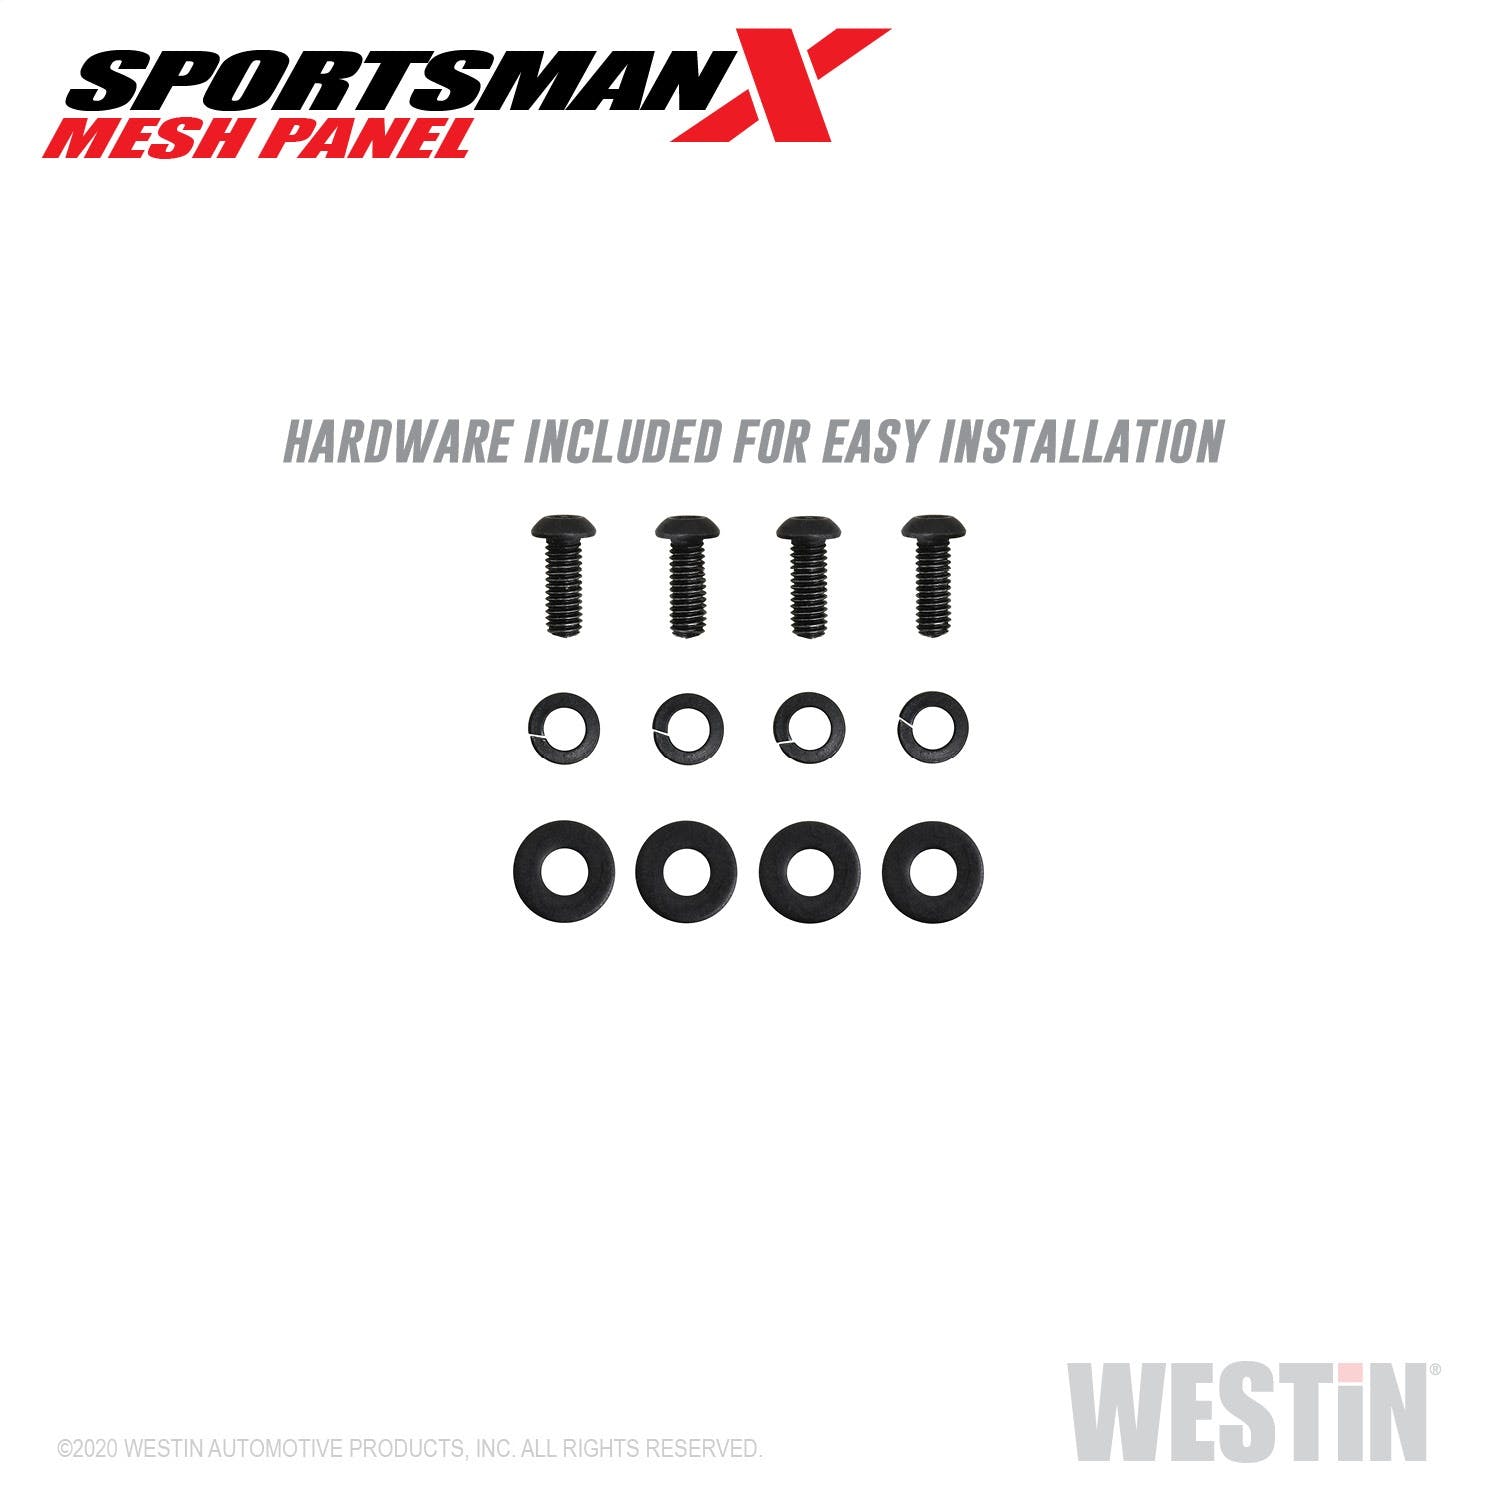 Westin Automotive 40-13035 Sportsman X Mesh Panel, Textured Black